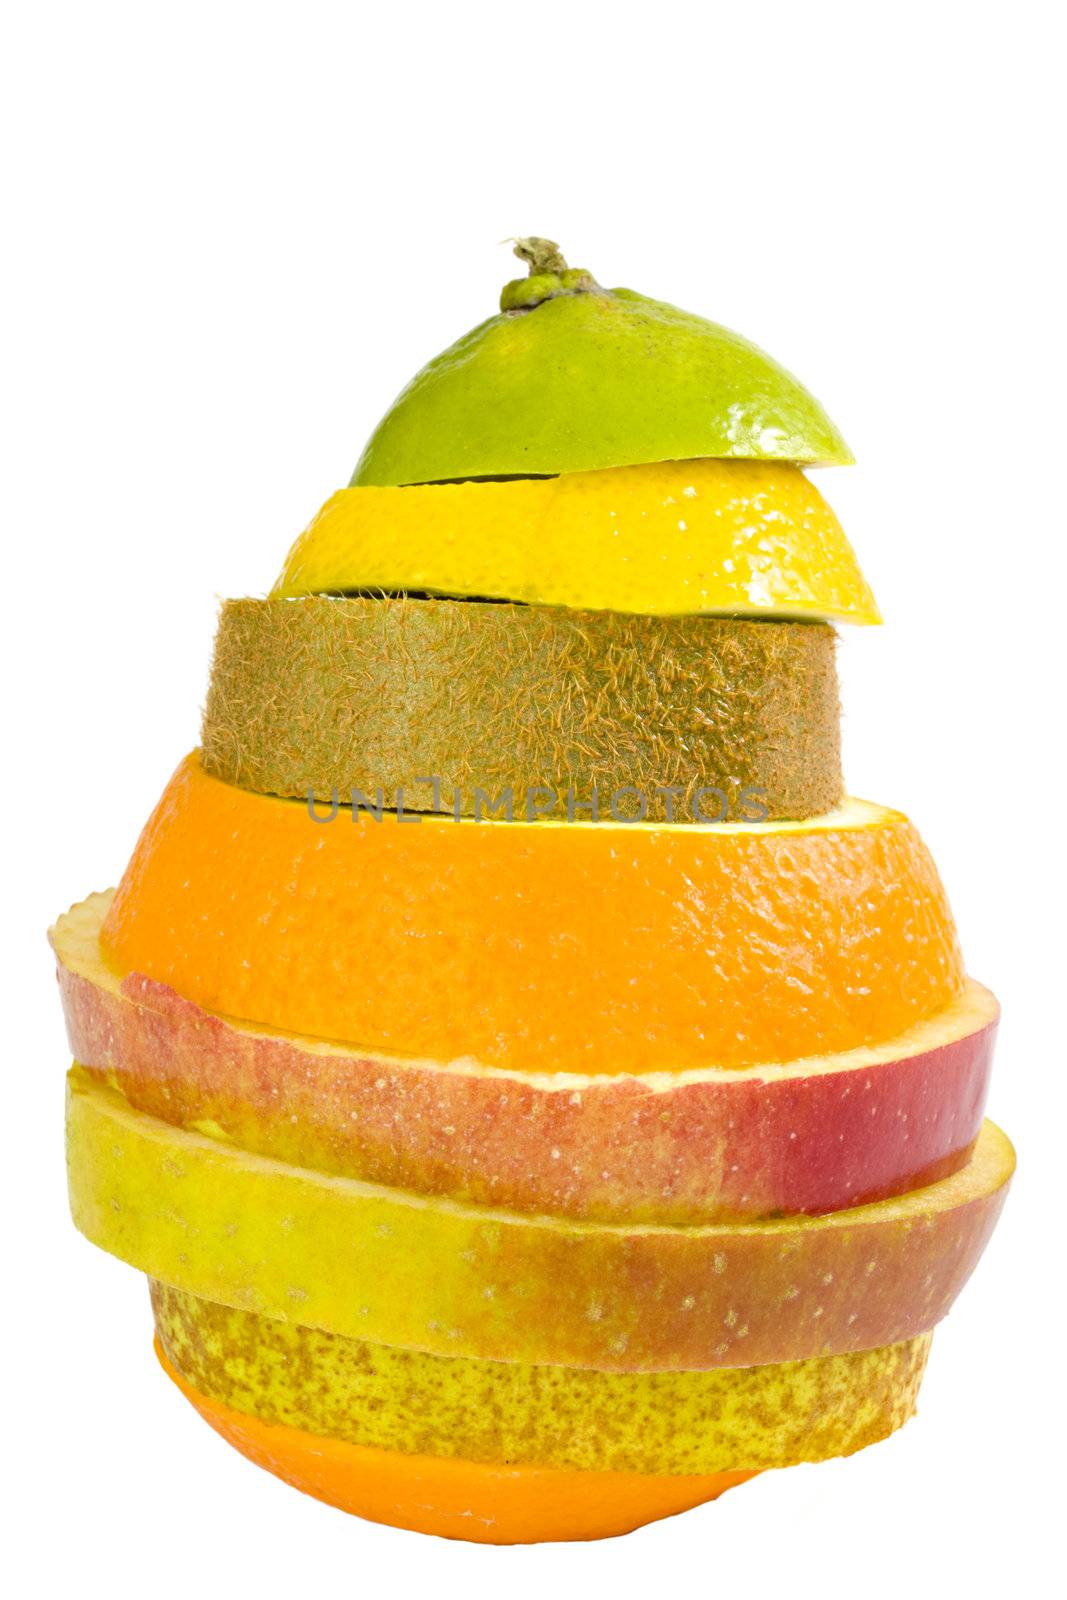 a new fruit composed of kiwi, orange, apple, lime and lemon slices